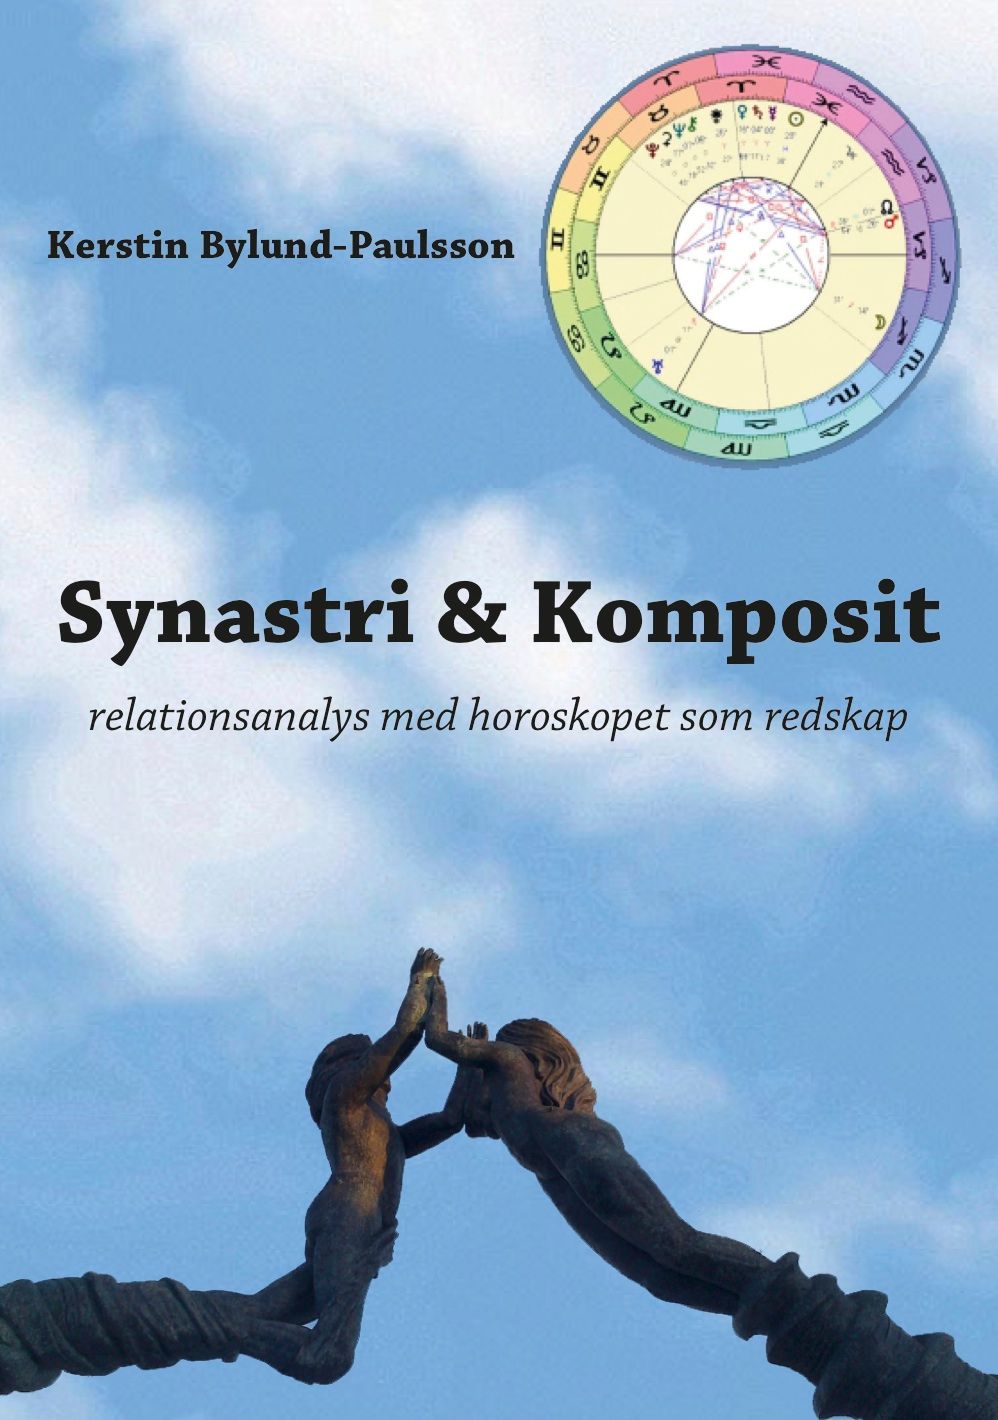 SYNASTRI OCH KOMPOSIT, eBook by Kerstin Bylund-Paulsson